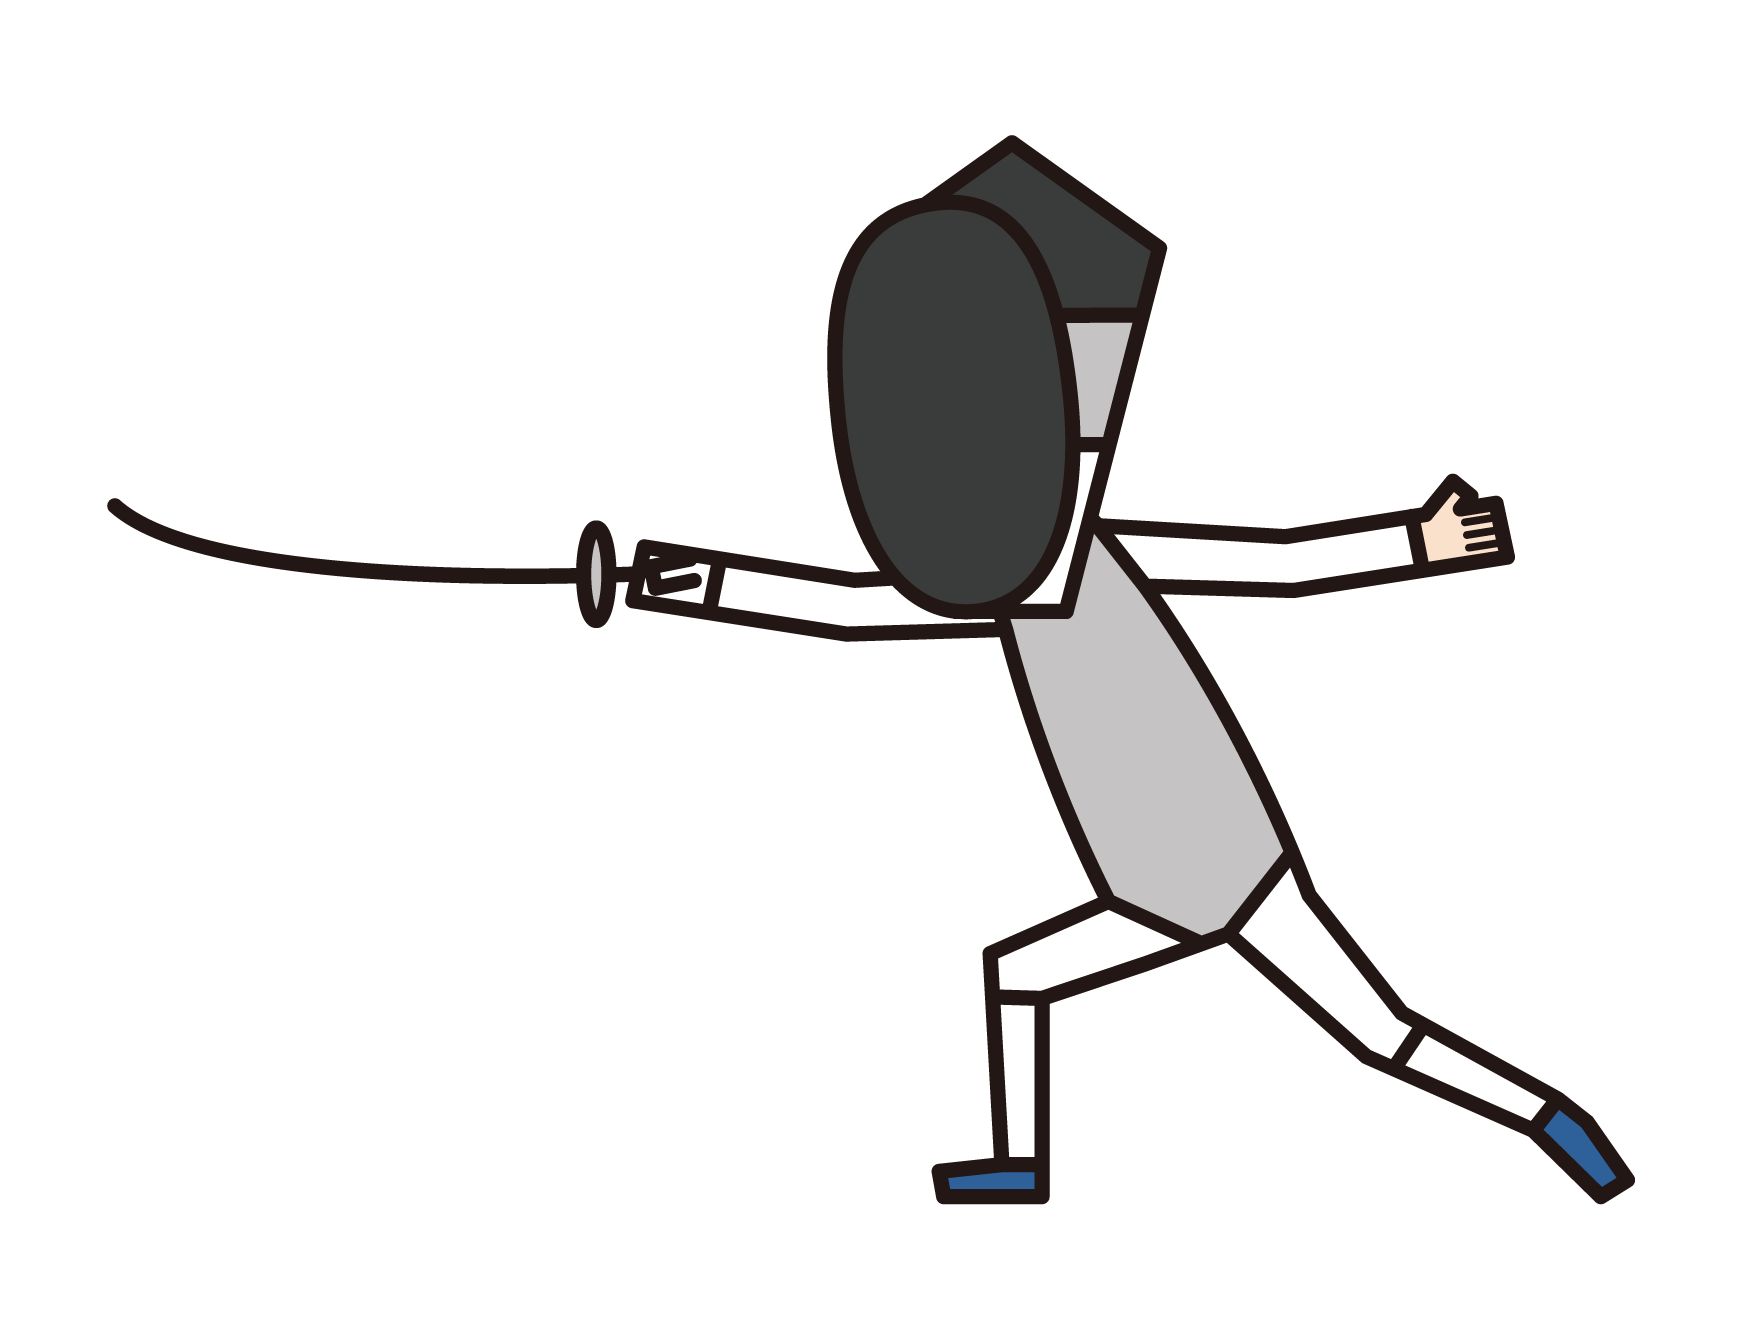 Fencing athlete illustration